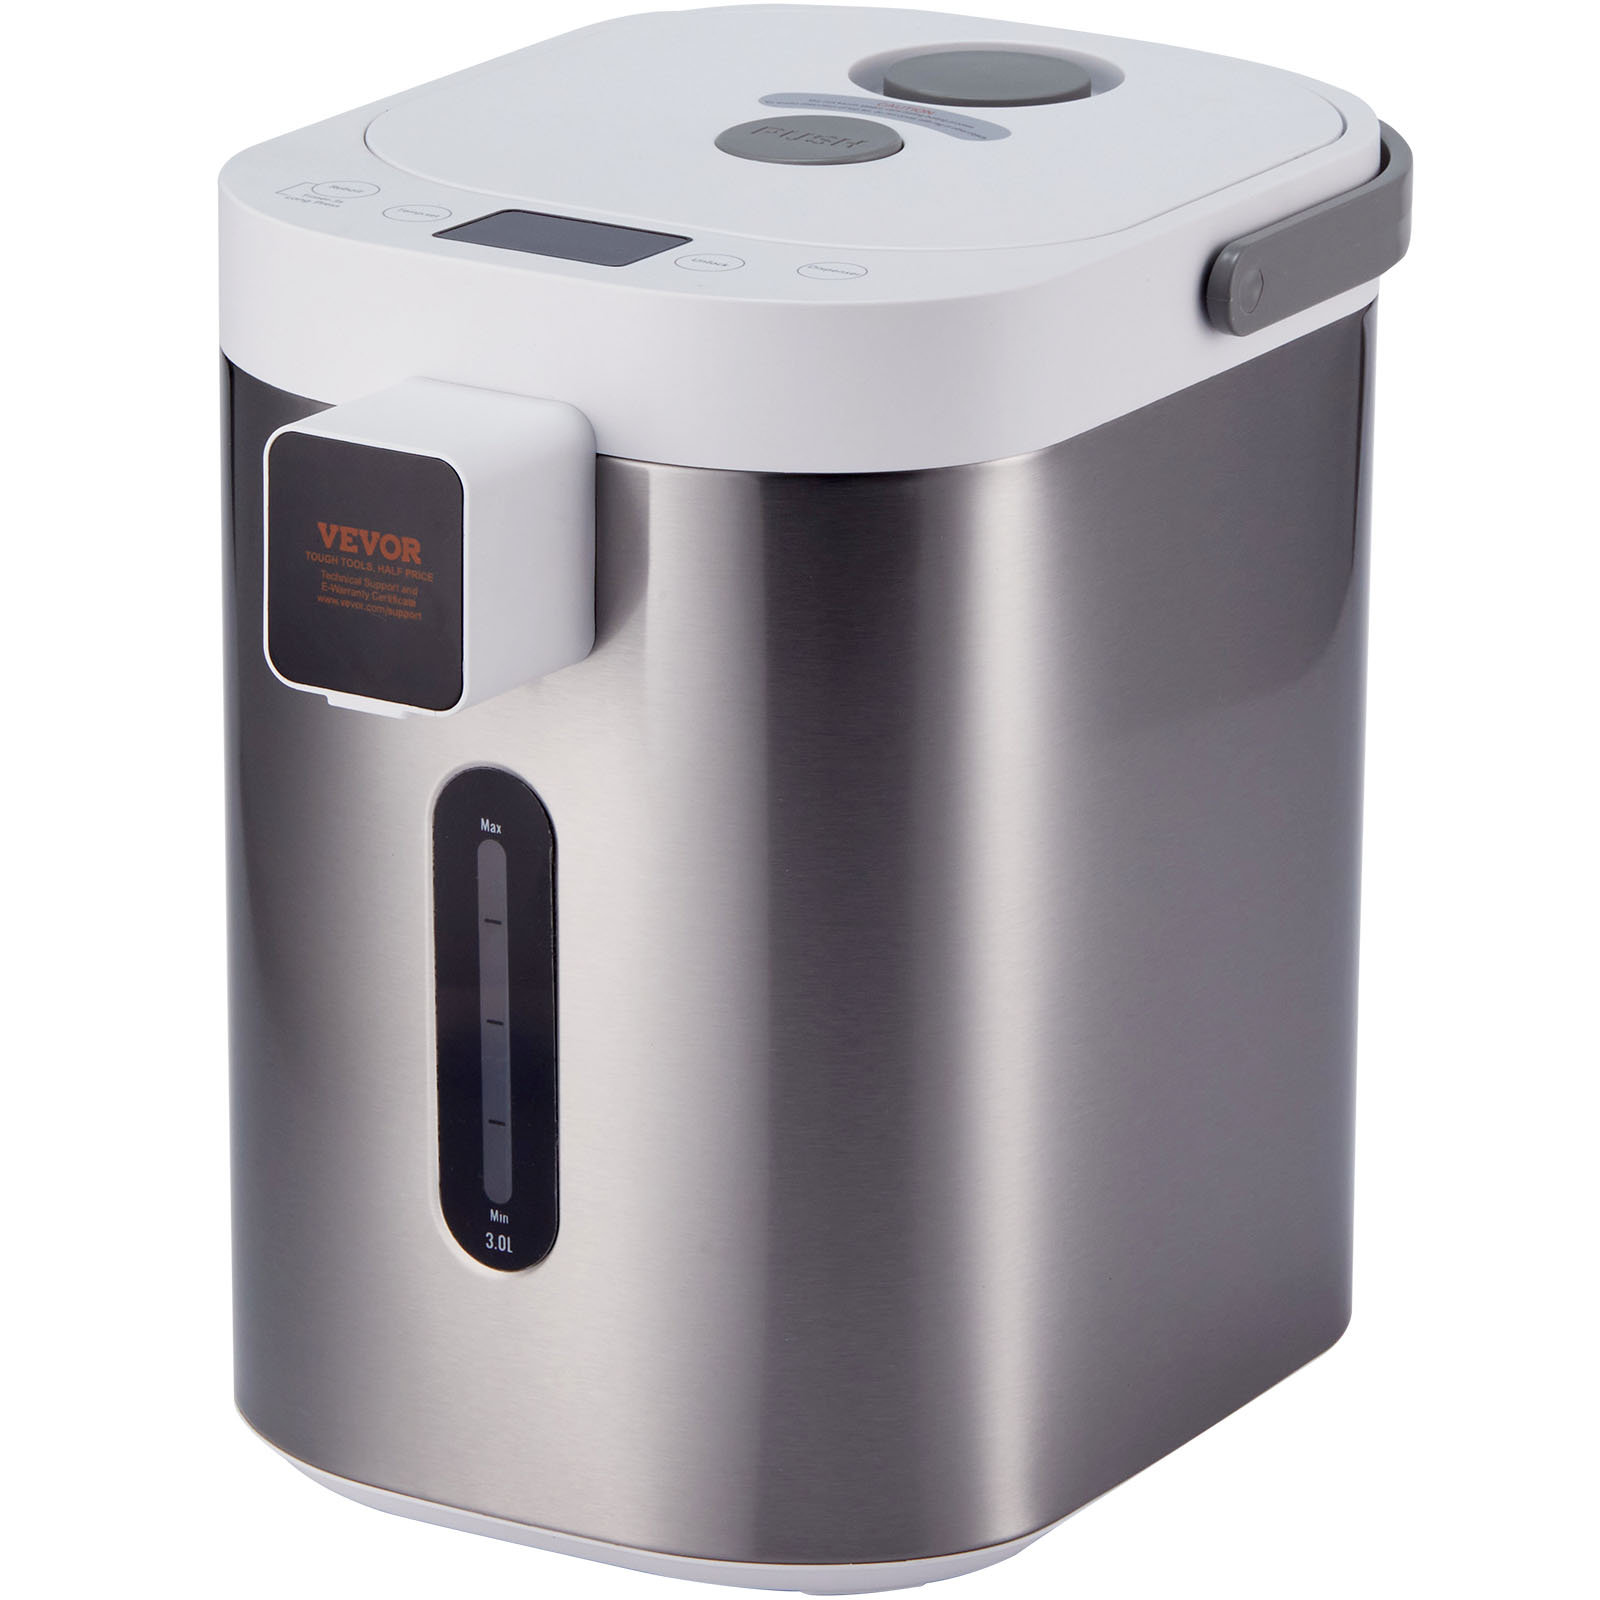 VEVOR Electric Kettle Adjustable 4 Temperatures Water Boiler and